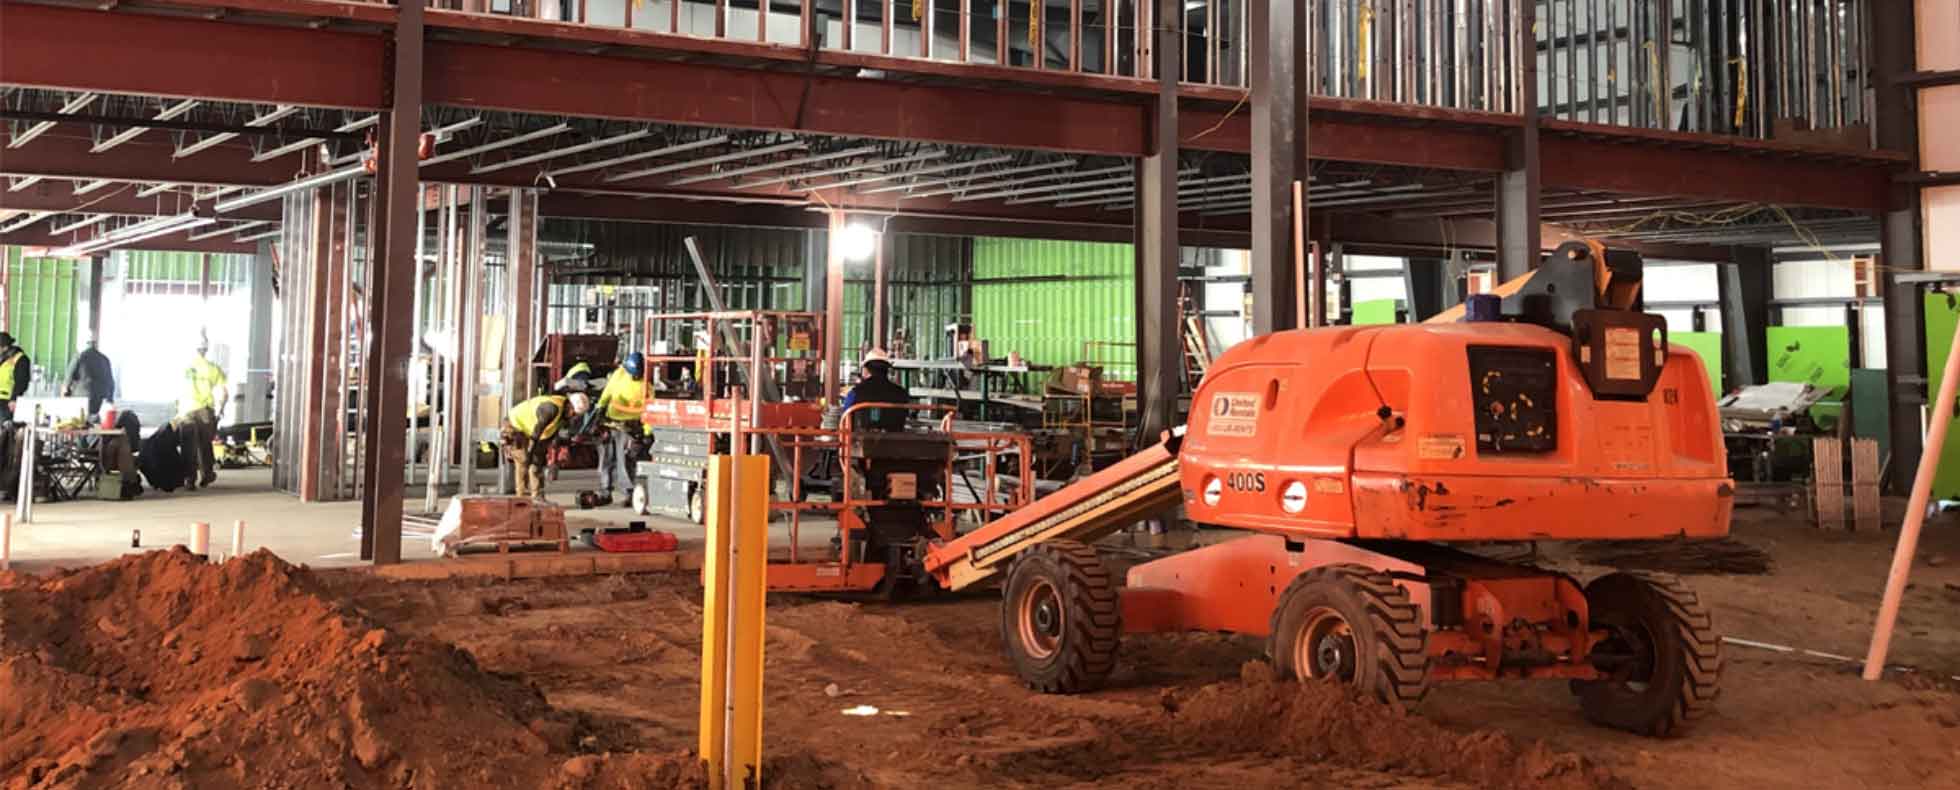 Construction Update: 2019 Progress of RDO Equipment Co. in Dayton, MN